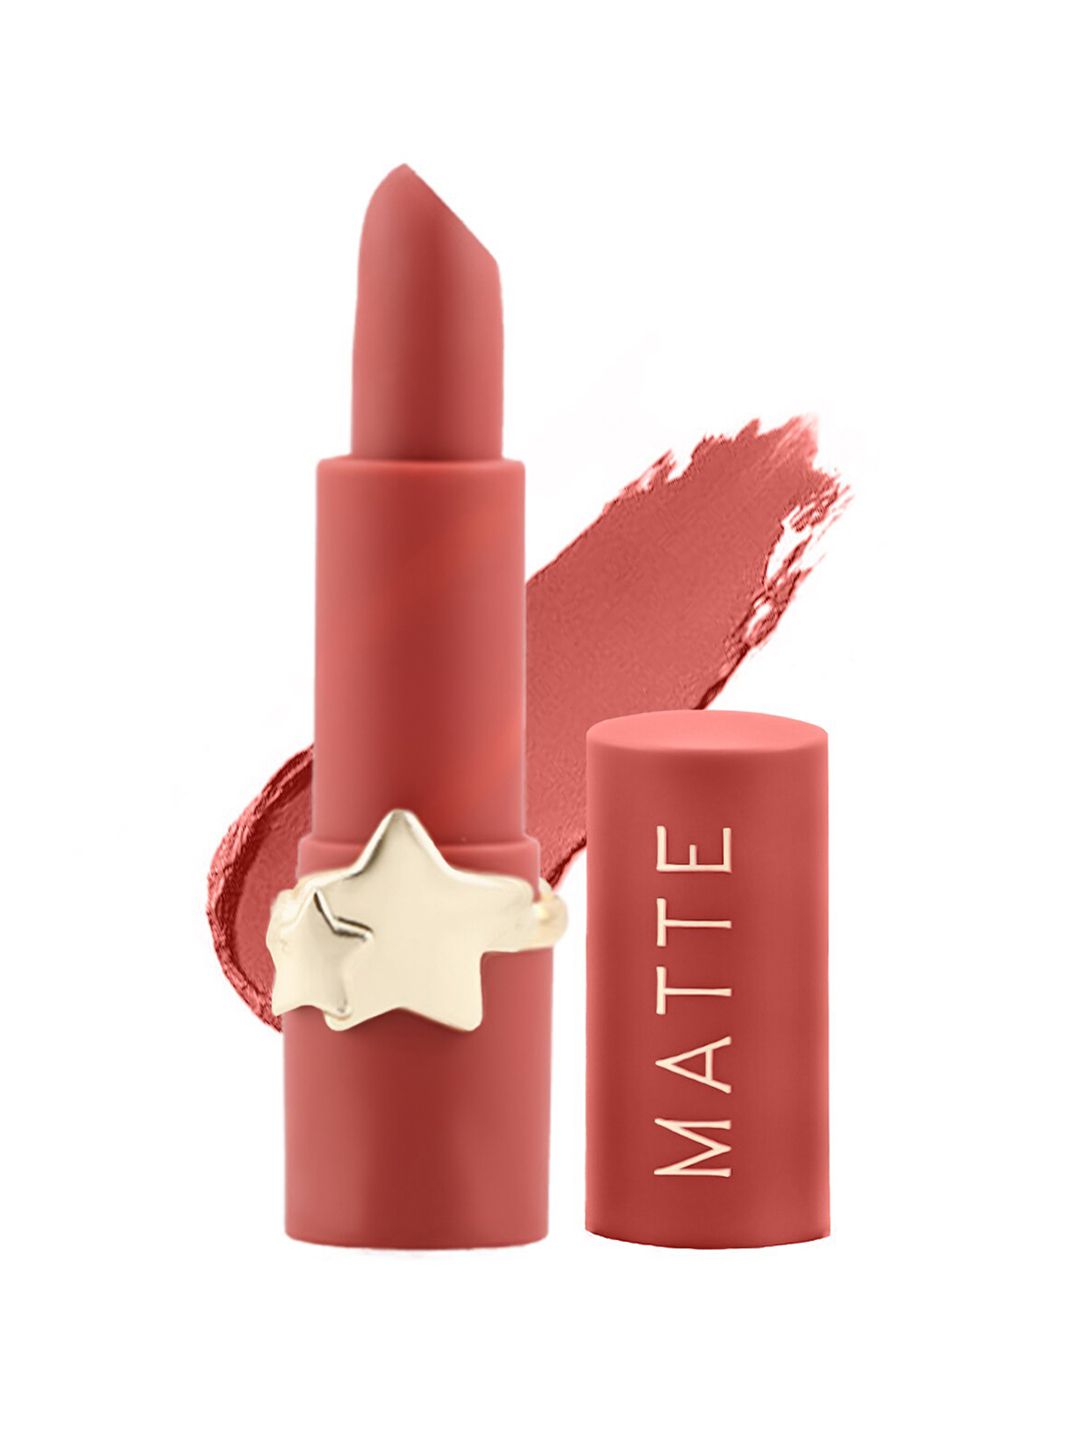 MISS ROSE Moisturizing Creamy Matte Lipstick 20g Price in India